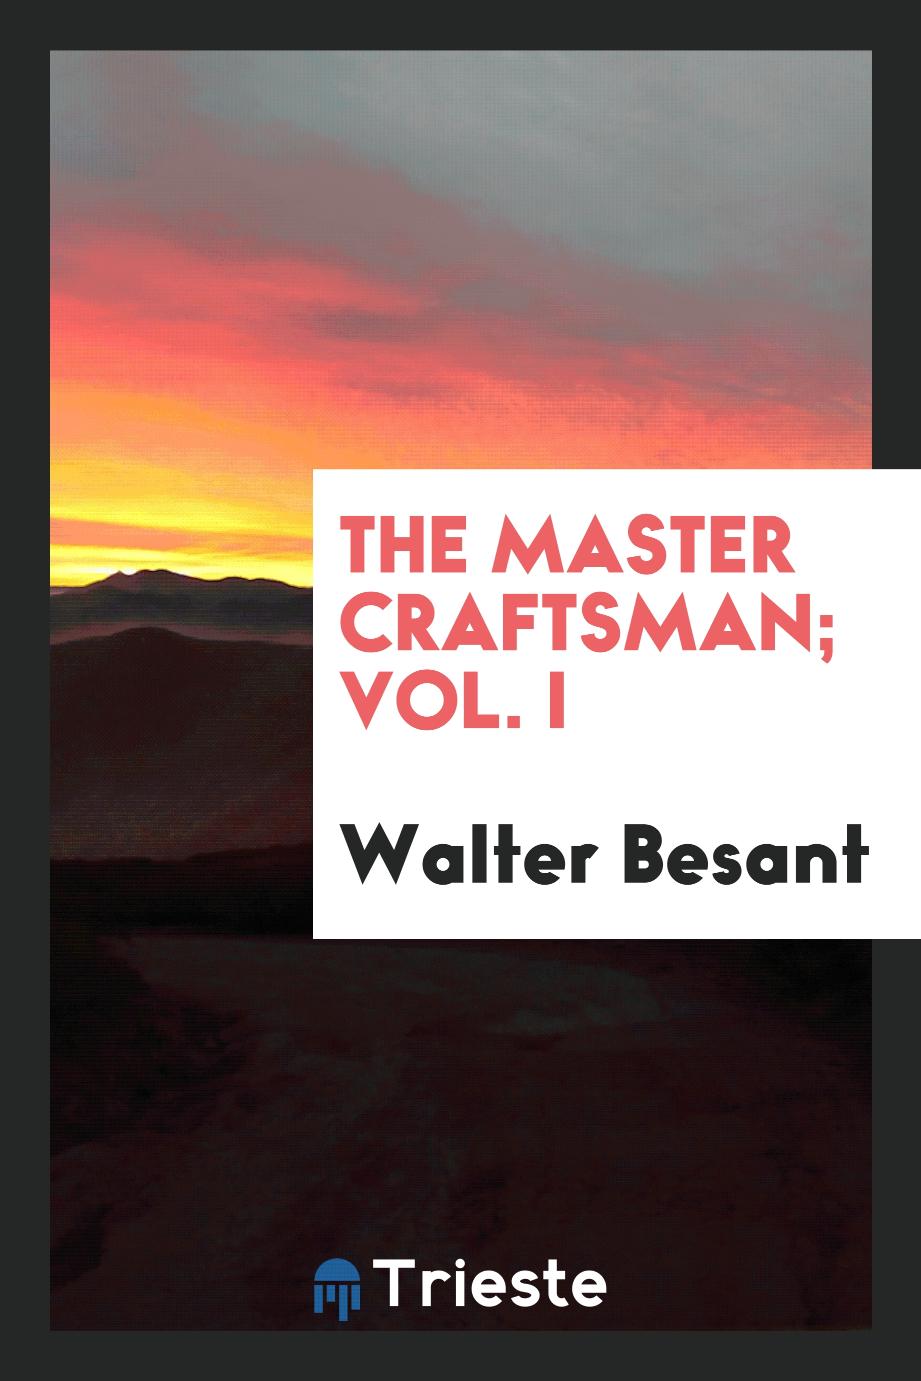 The master craftsman; Vol. I